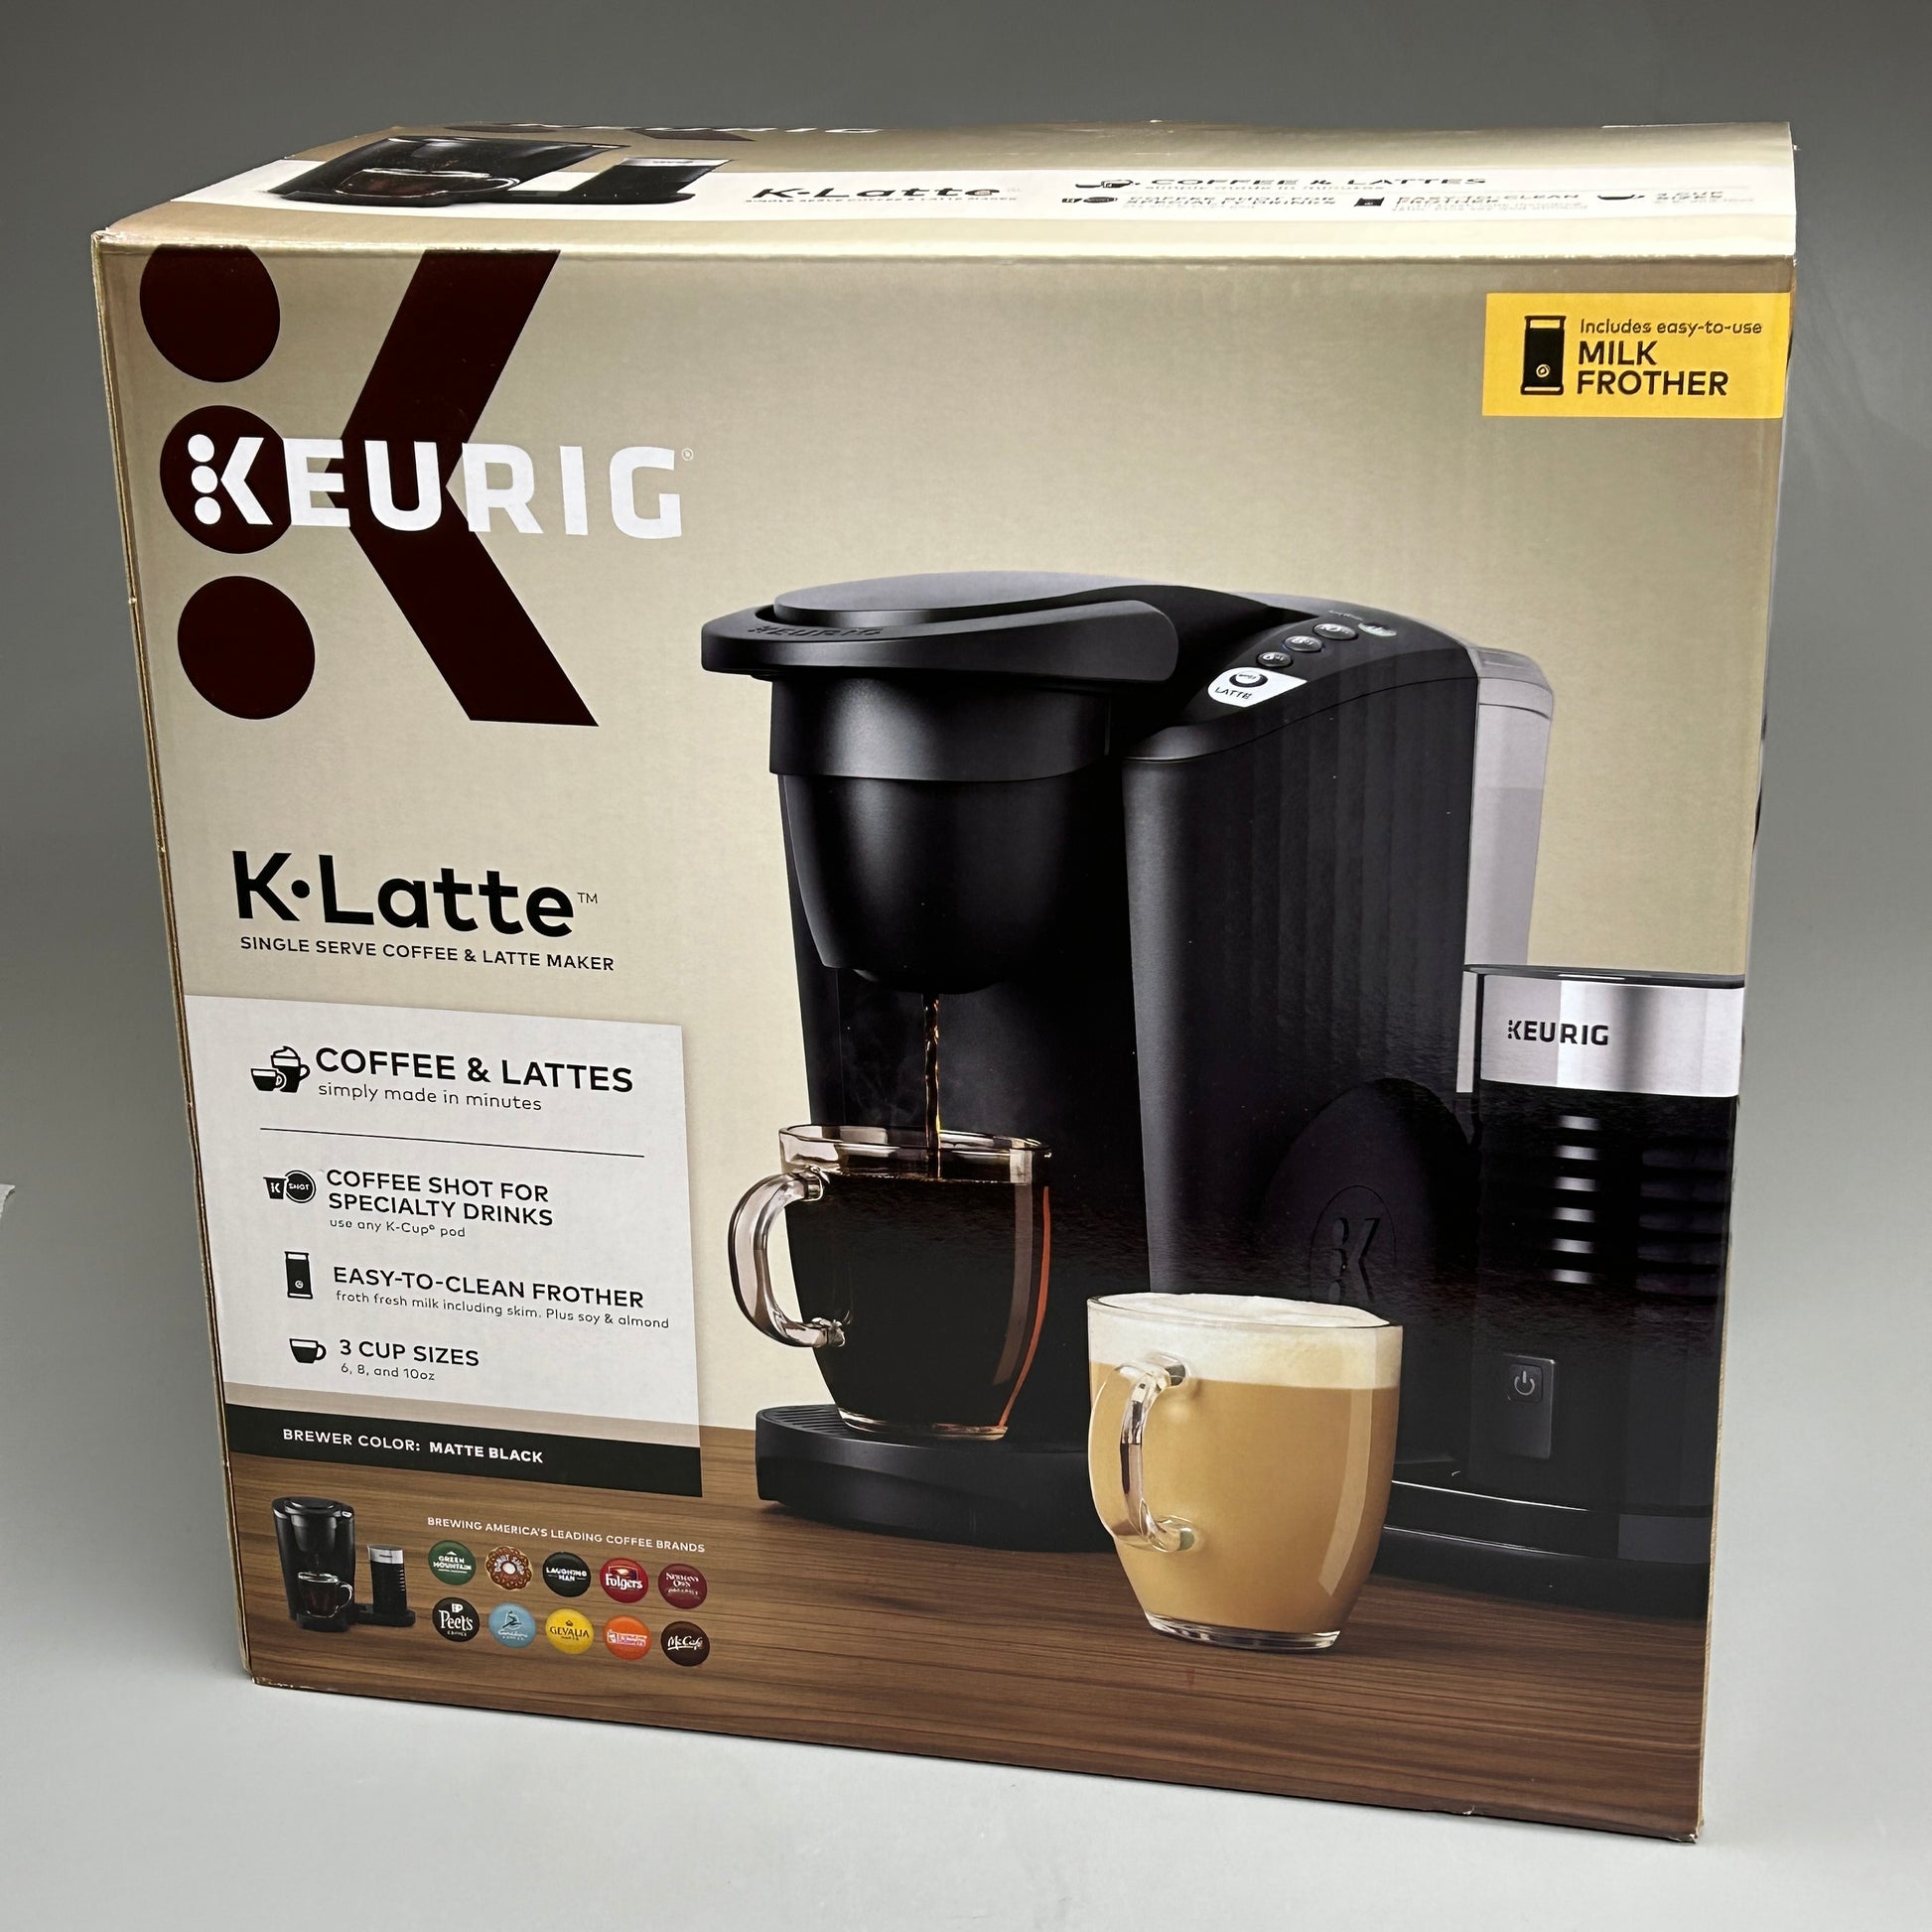 KEURIG K-Latte Single Serve Coffee and Latte Maker with Milk